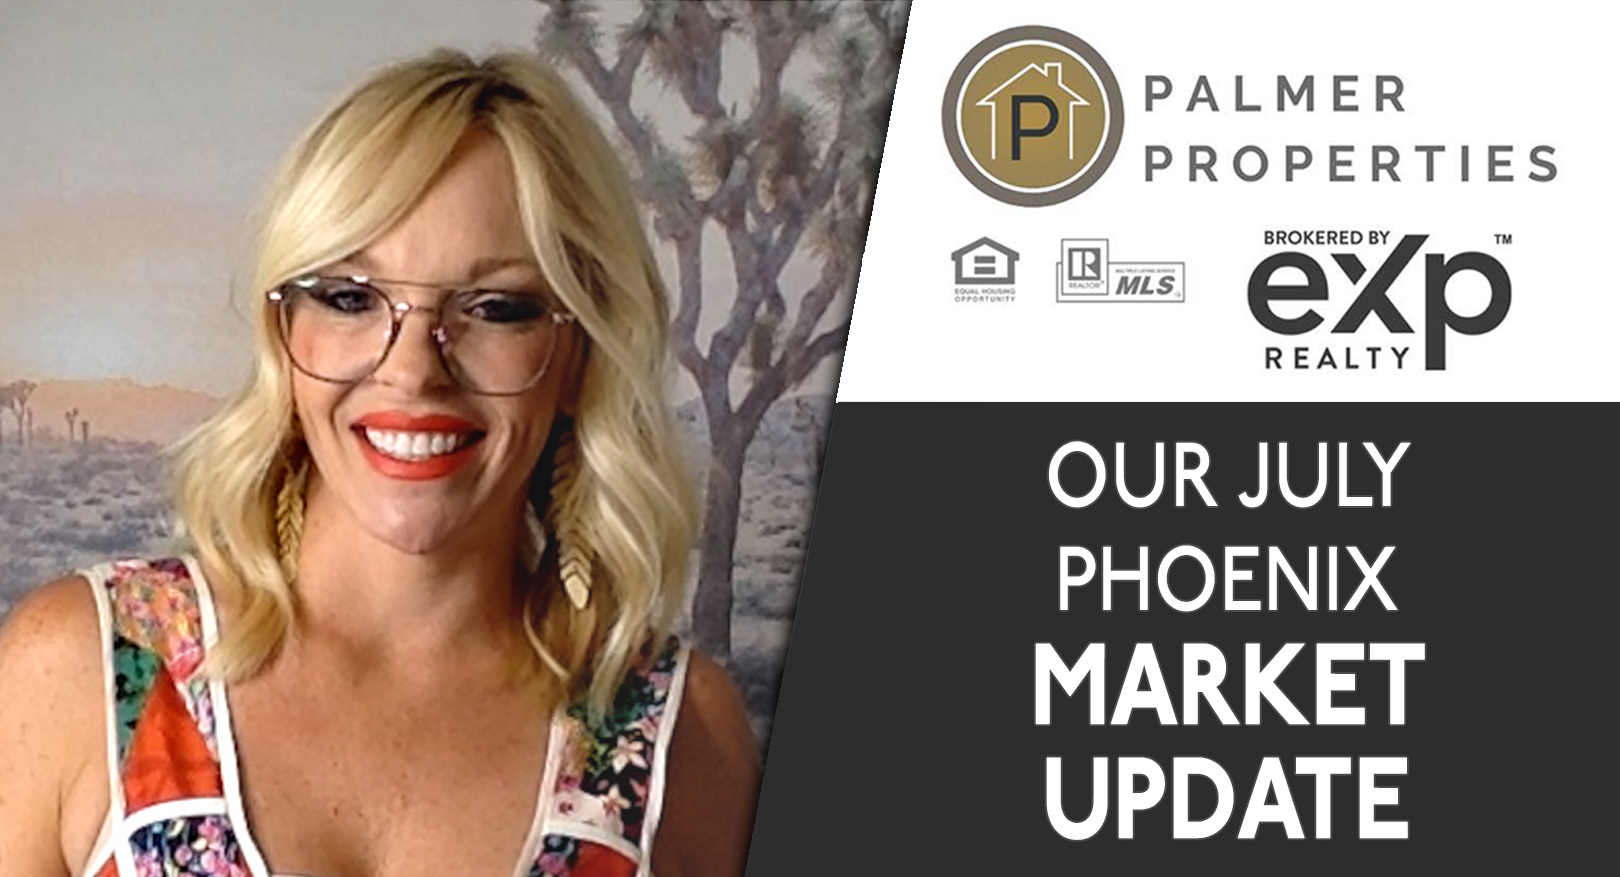 Your July 2021 Phoenix Market Update